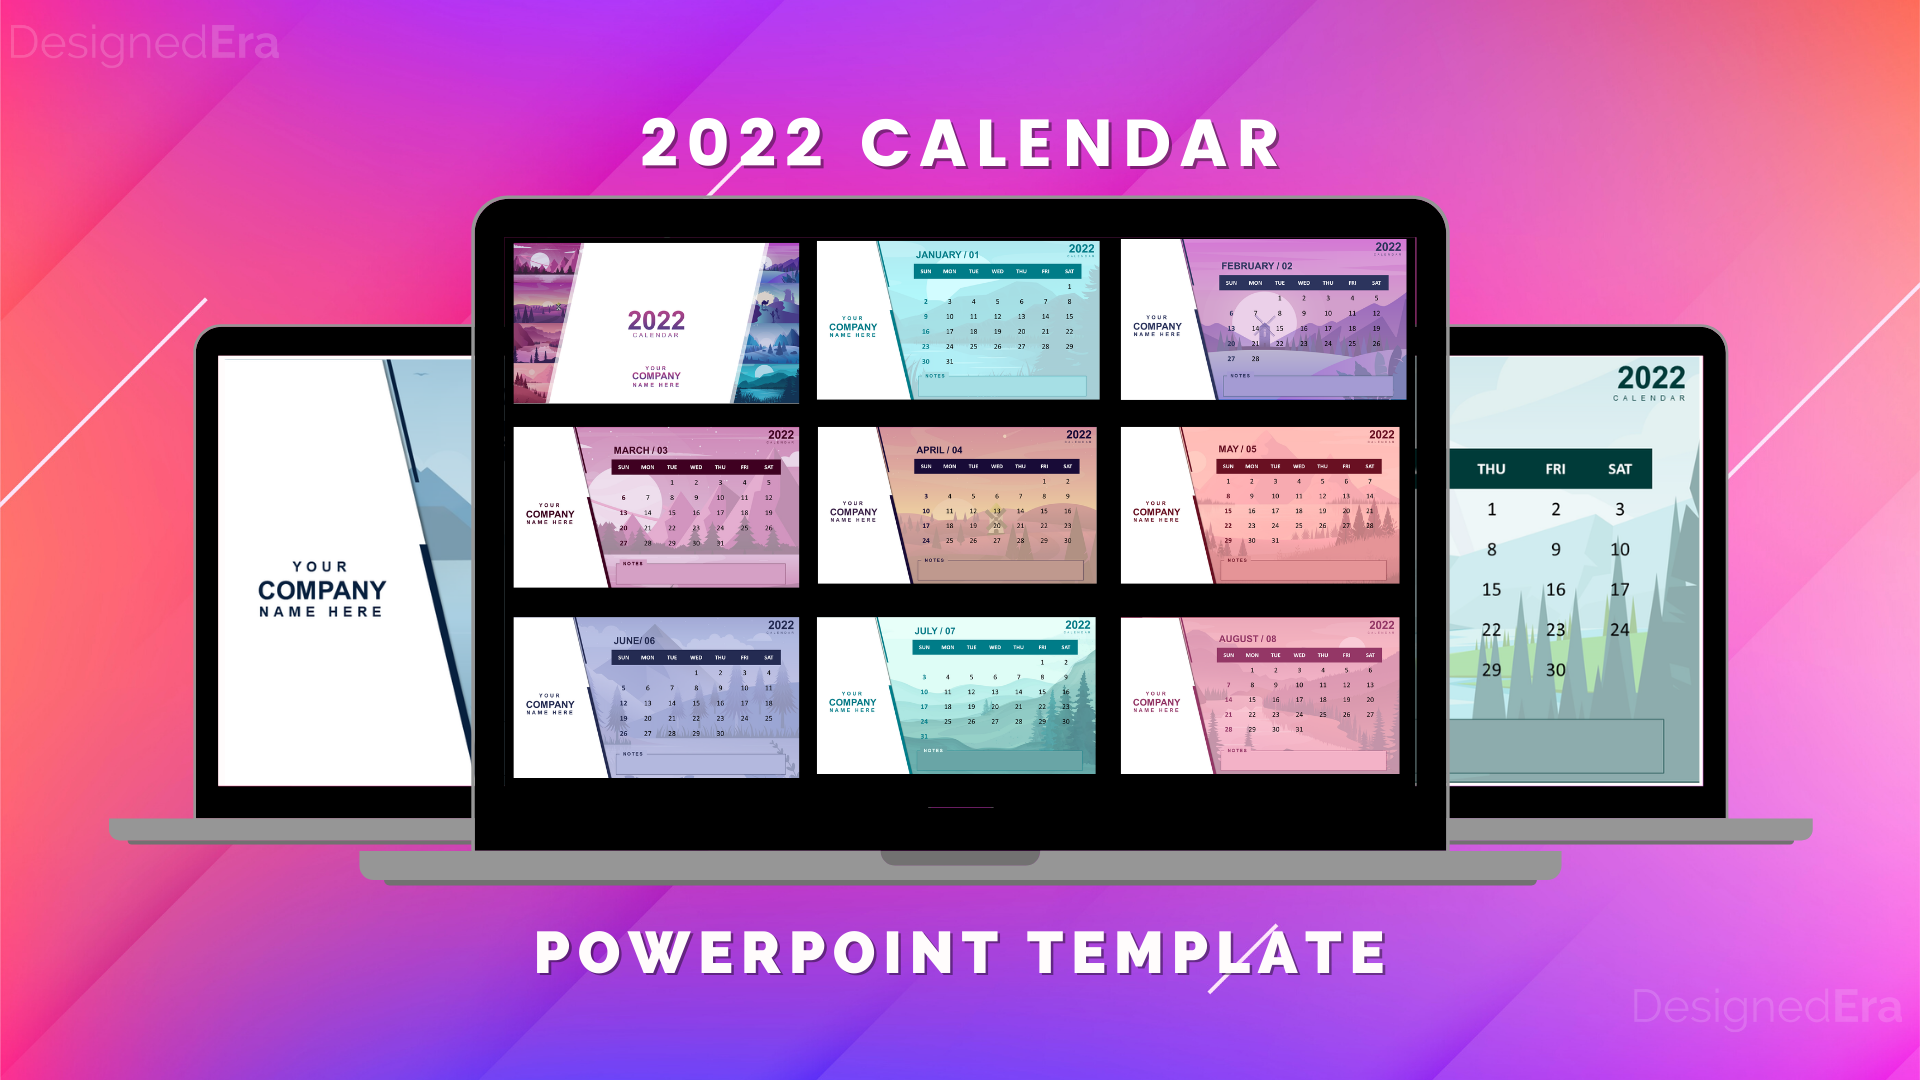 2022-calendar-powerpoint-template-designedera